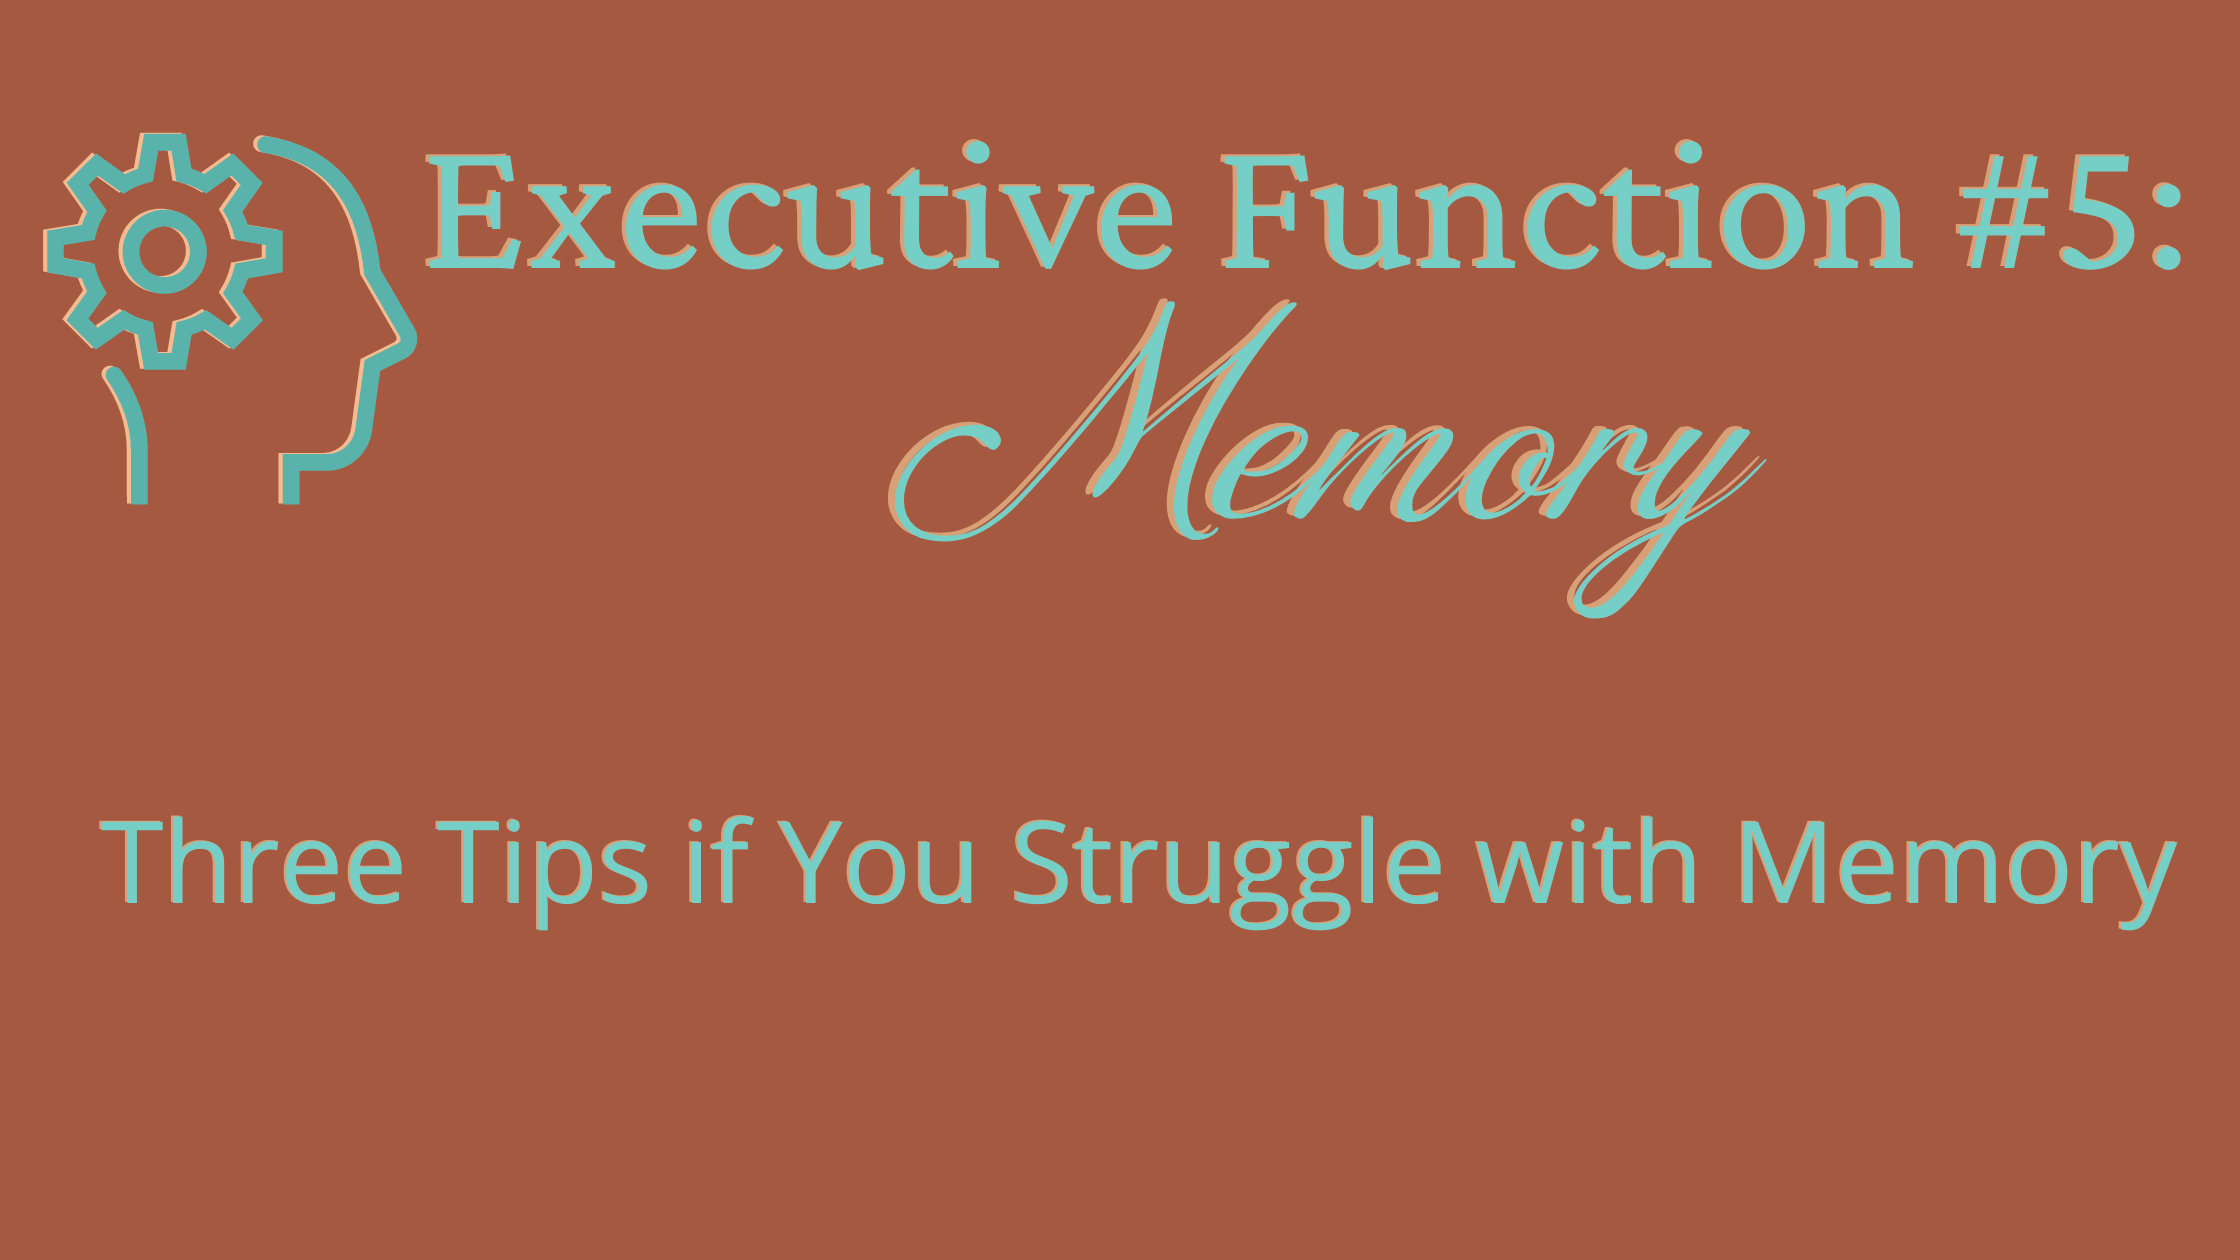 Executive Function #5- Memory